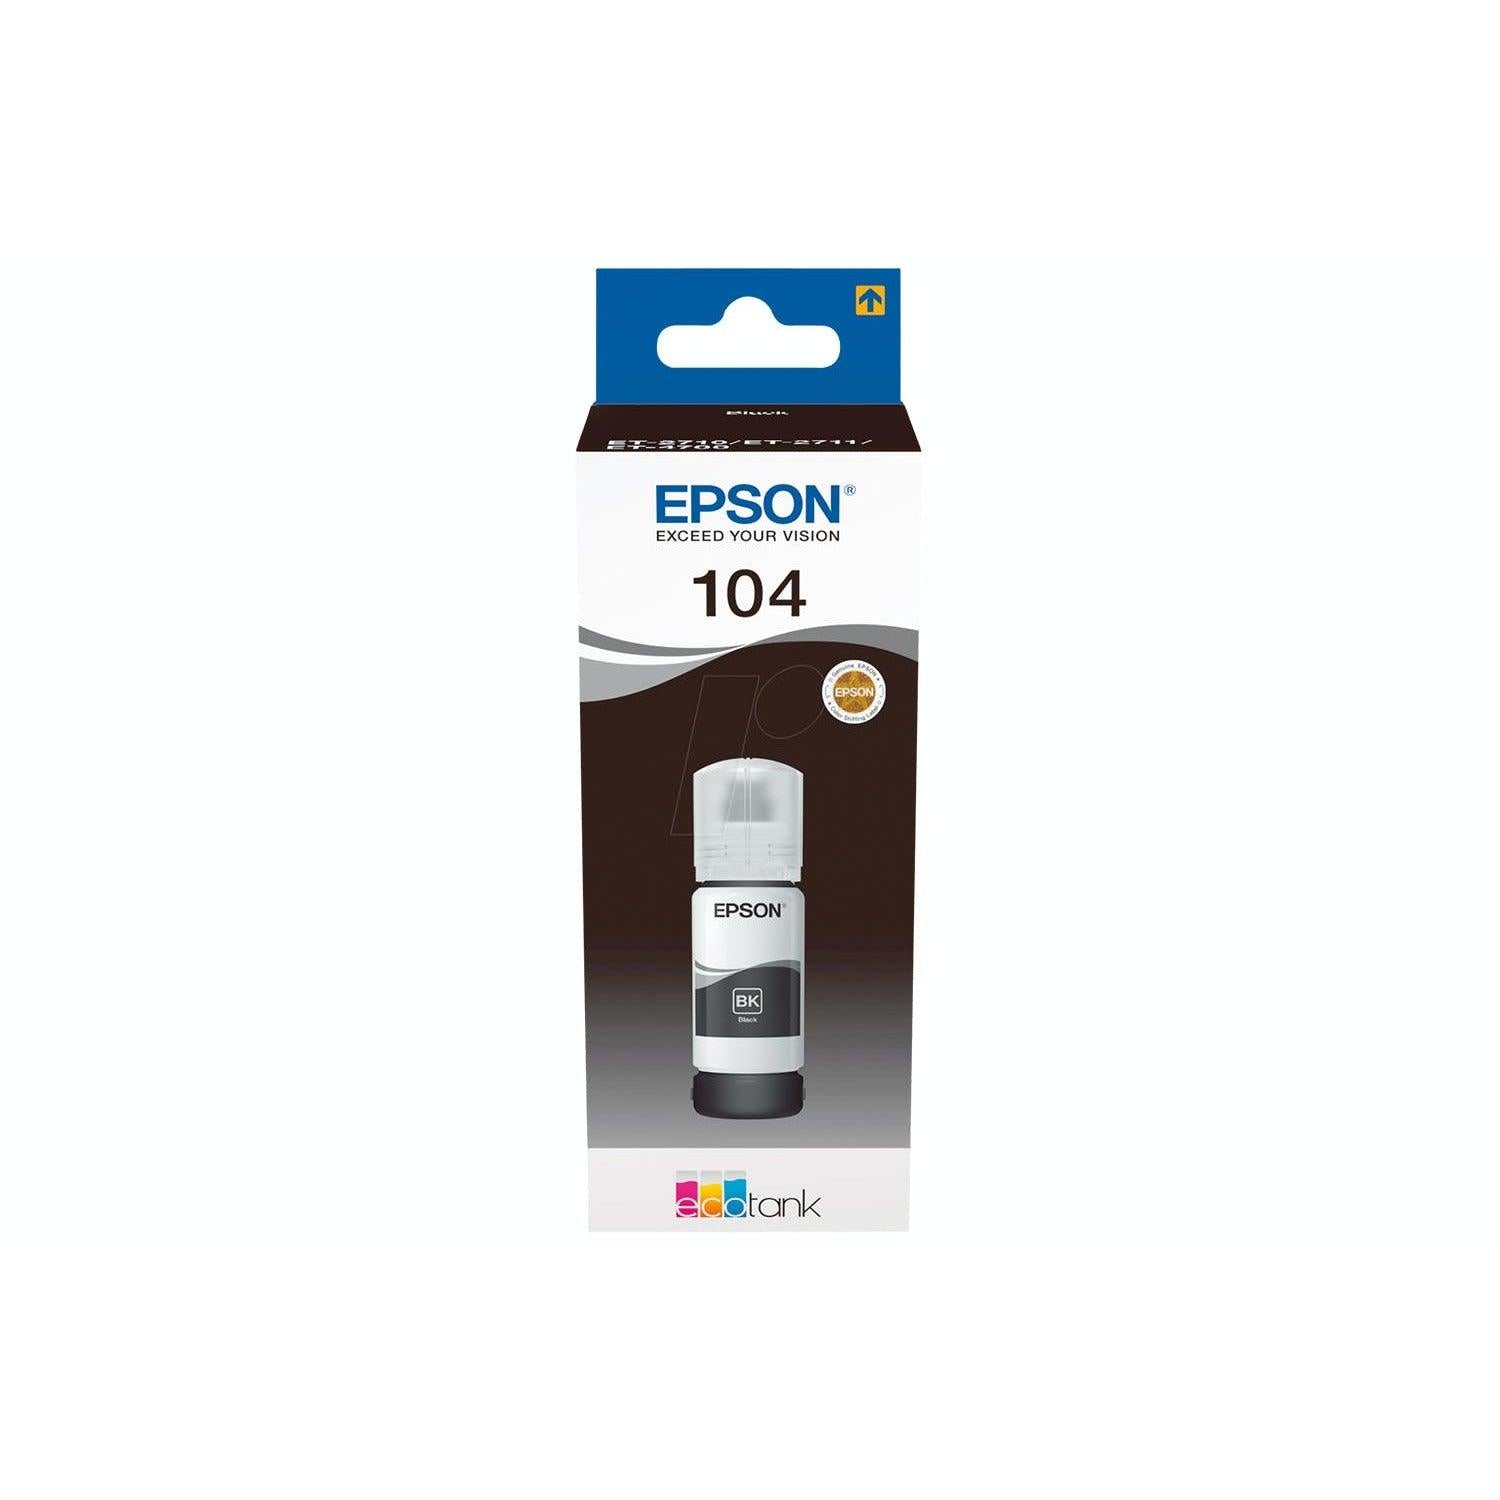 SEPS1430_Epson 104 EcoTank Ink Bottle - Black-1 (7424813531324)